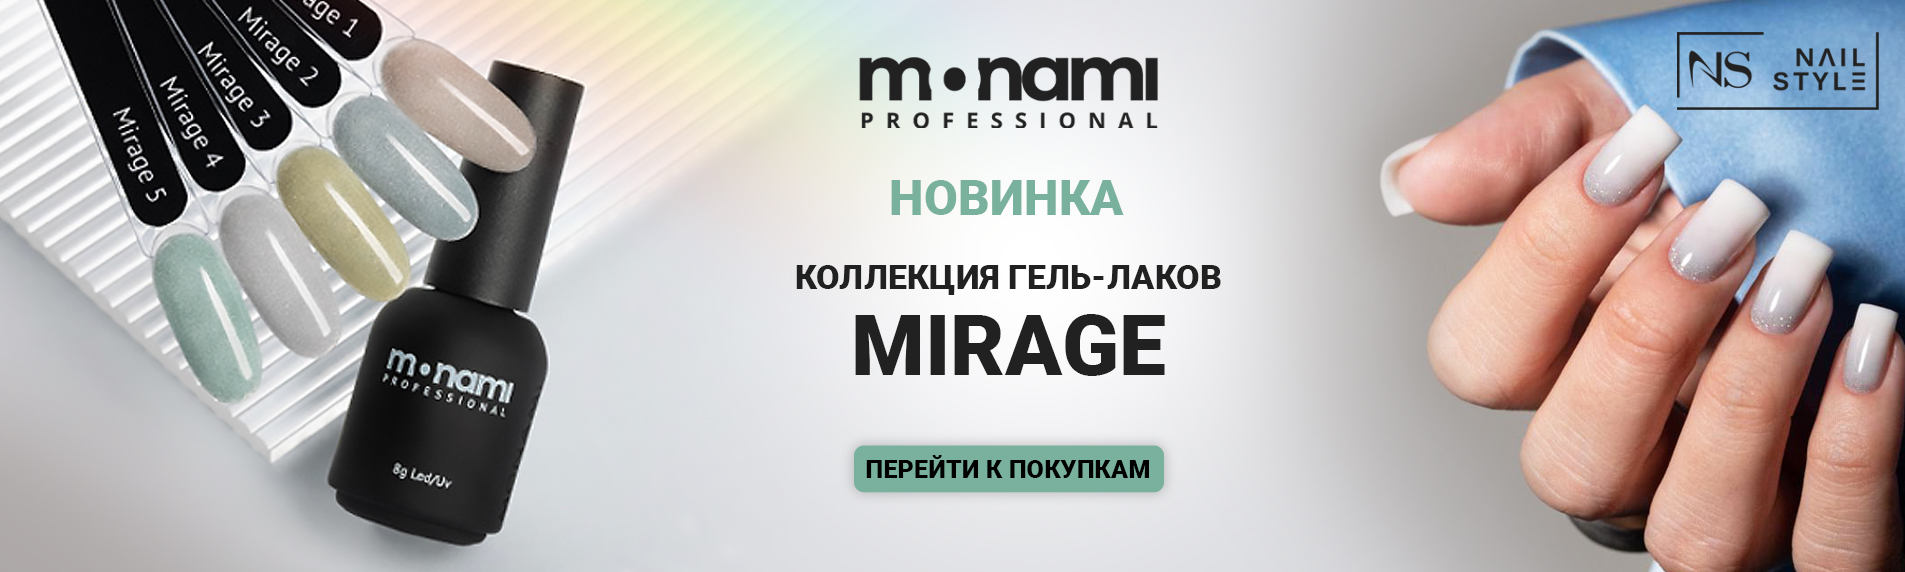 Сайт Монами Mirage.jpg